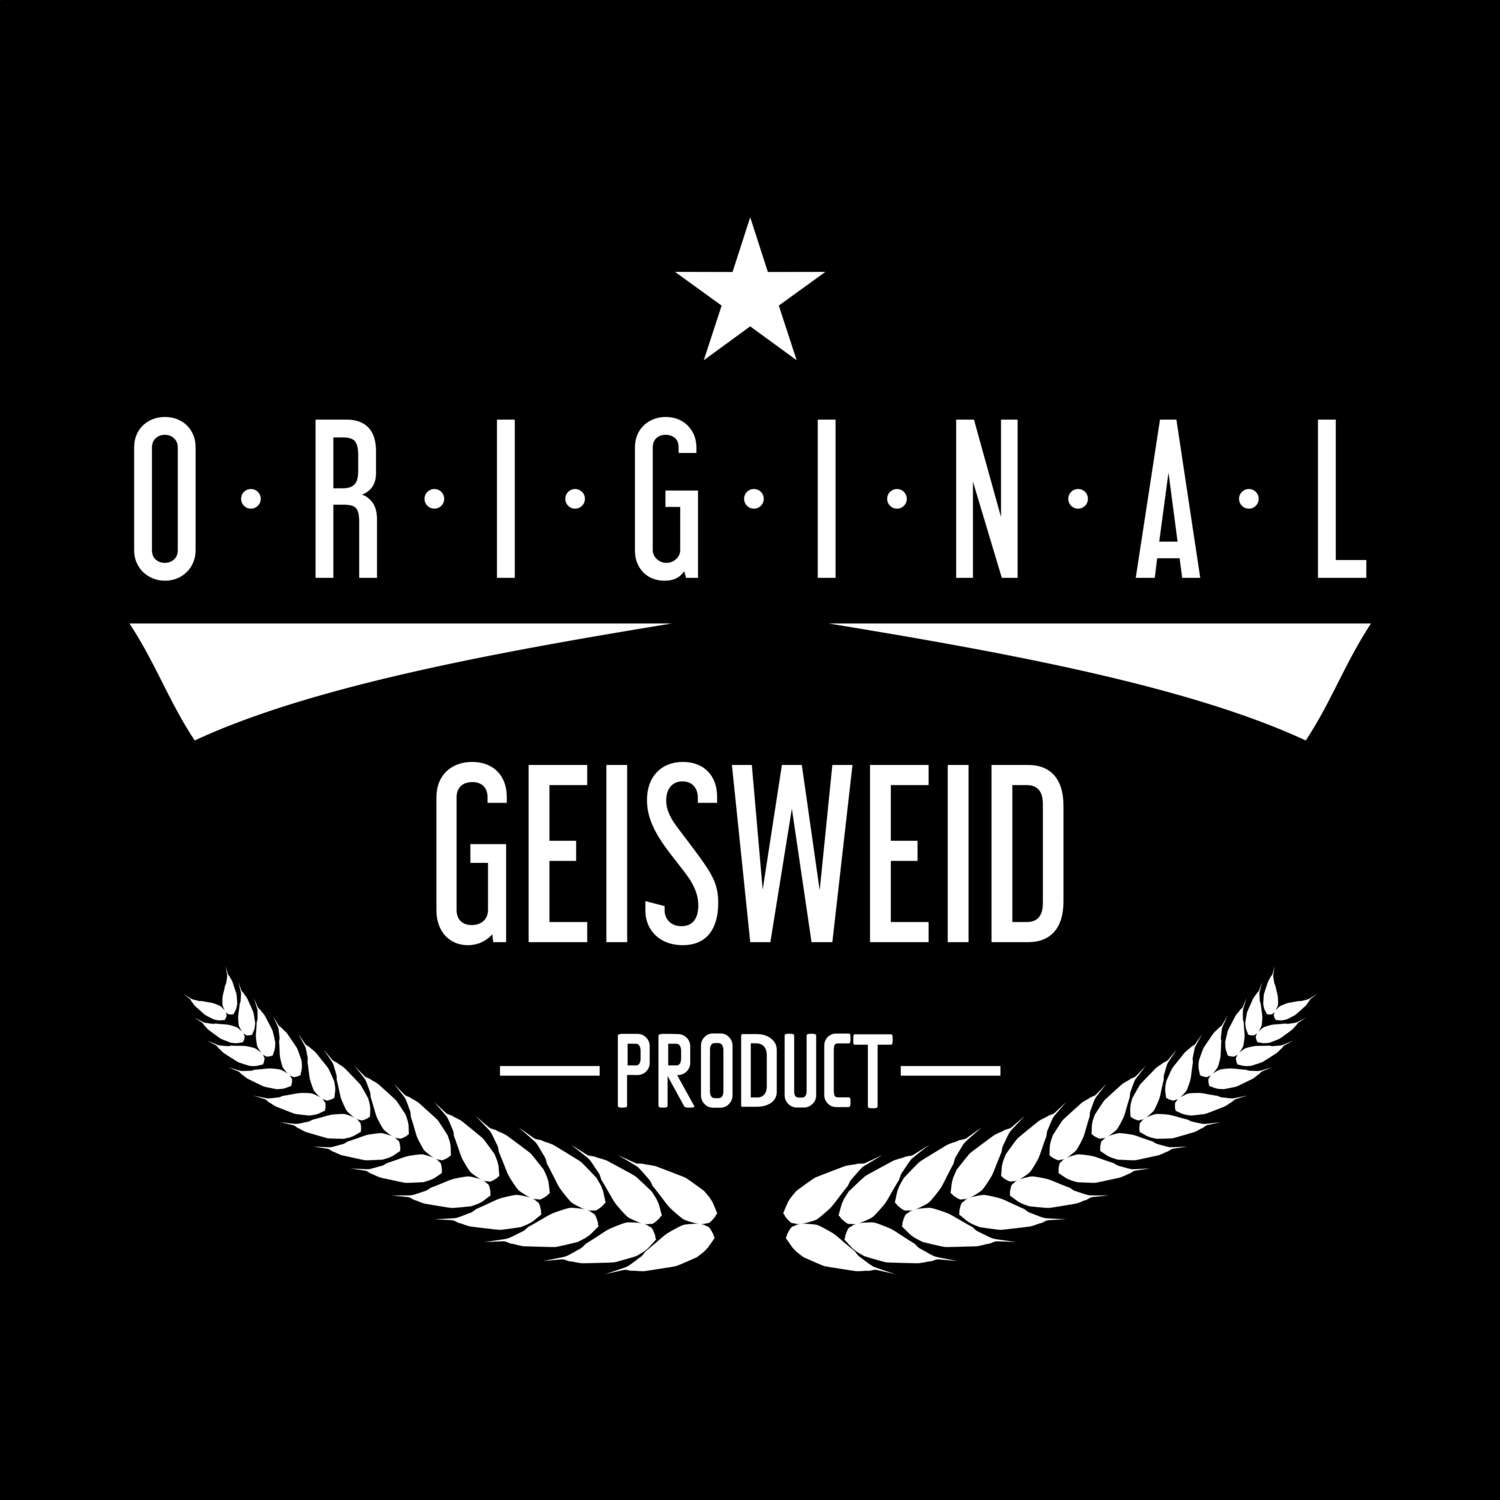 Geisweid T-Shirt »Original Product«